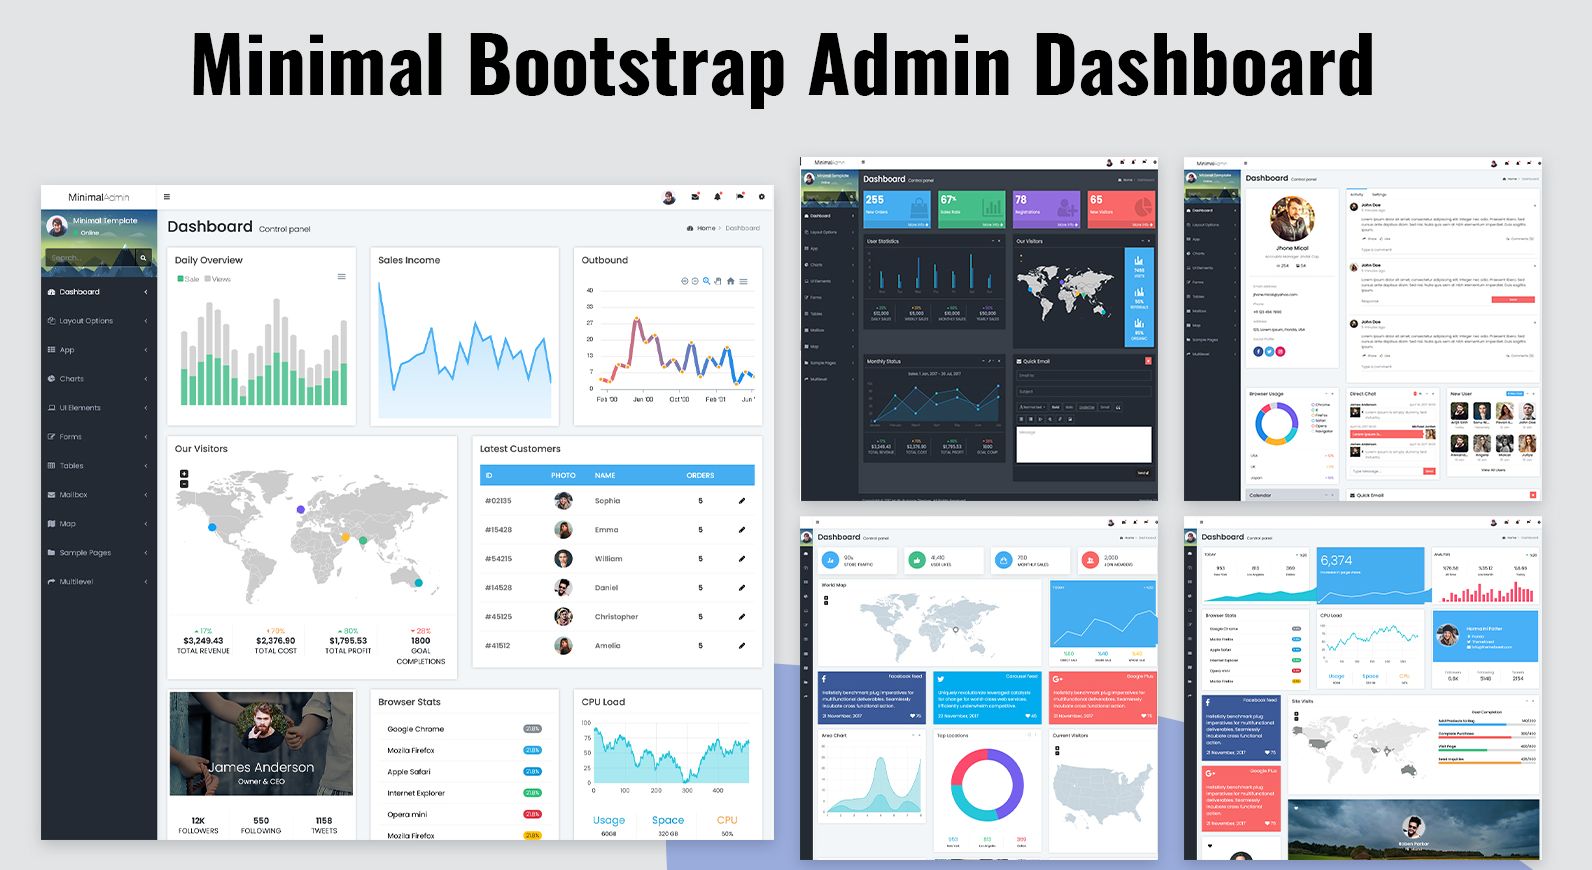 Bootstrap Admin Templates